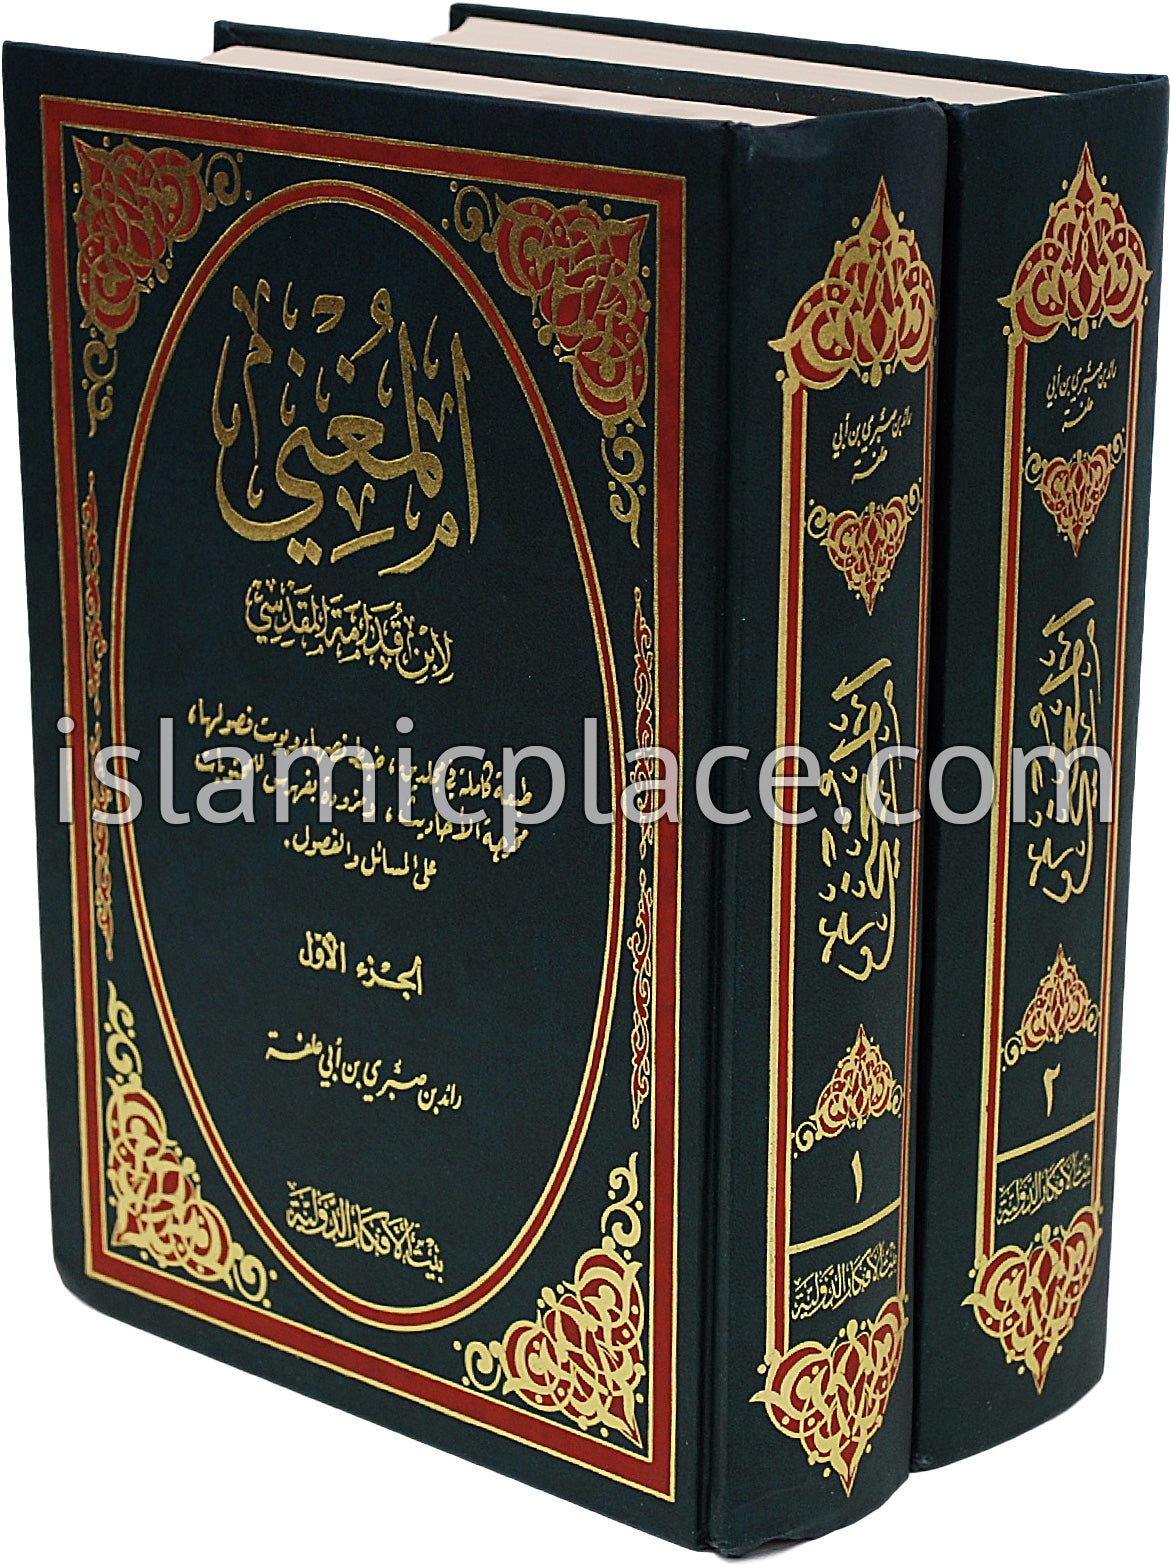 [2 vol set] Arabic: Al-Mughni